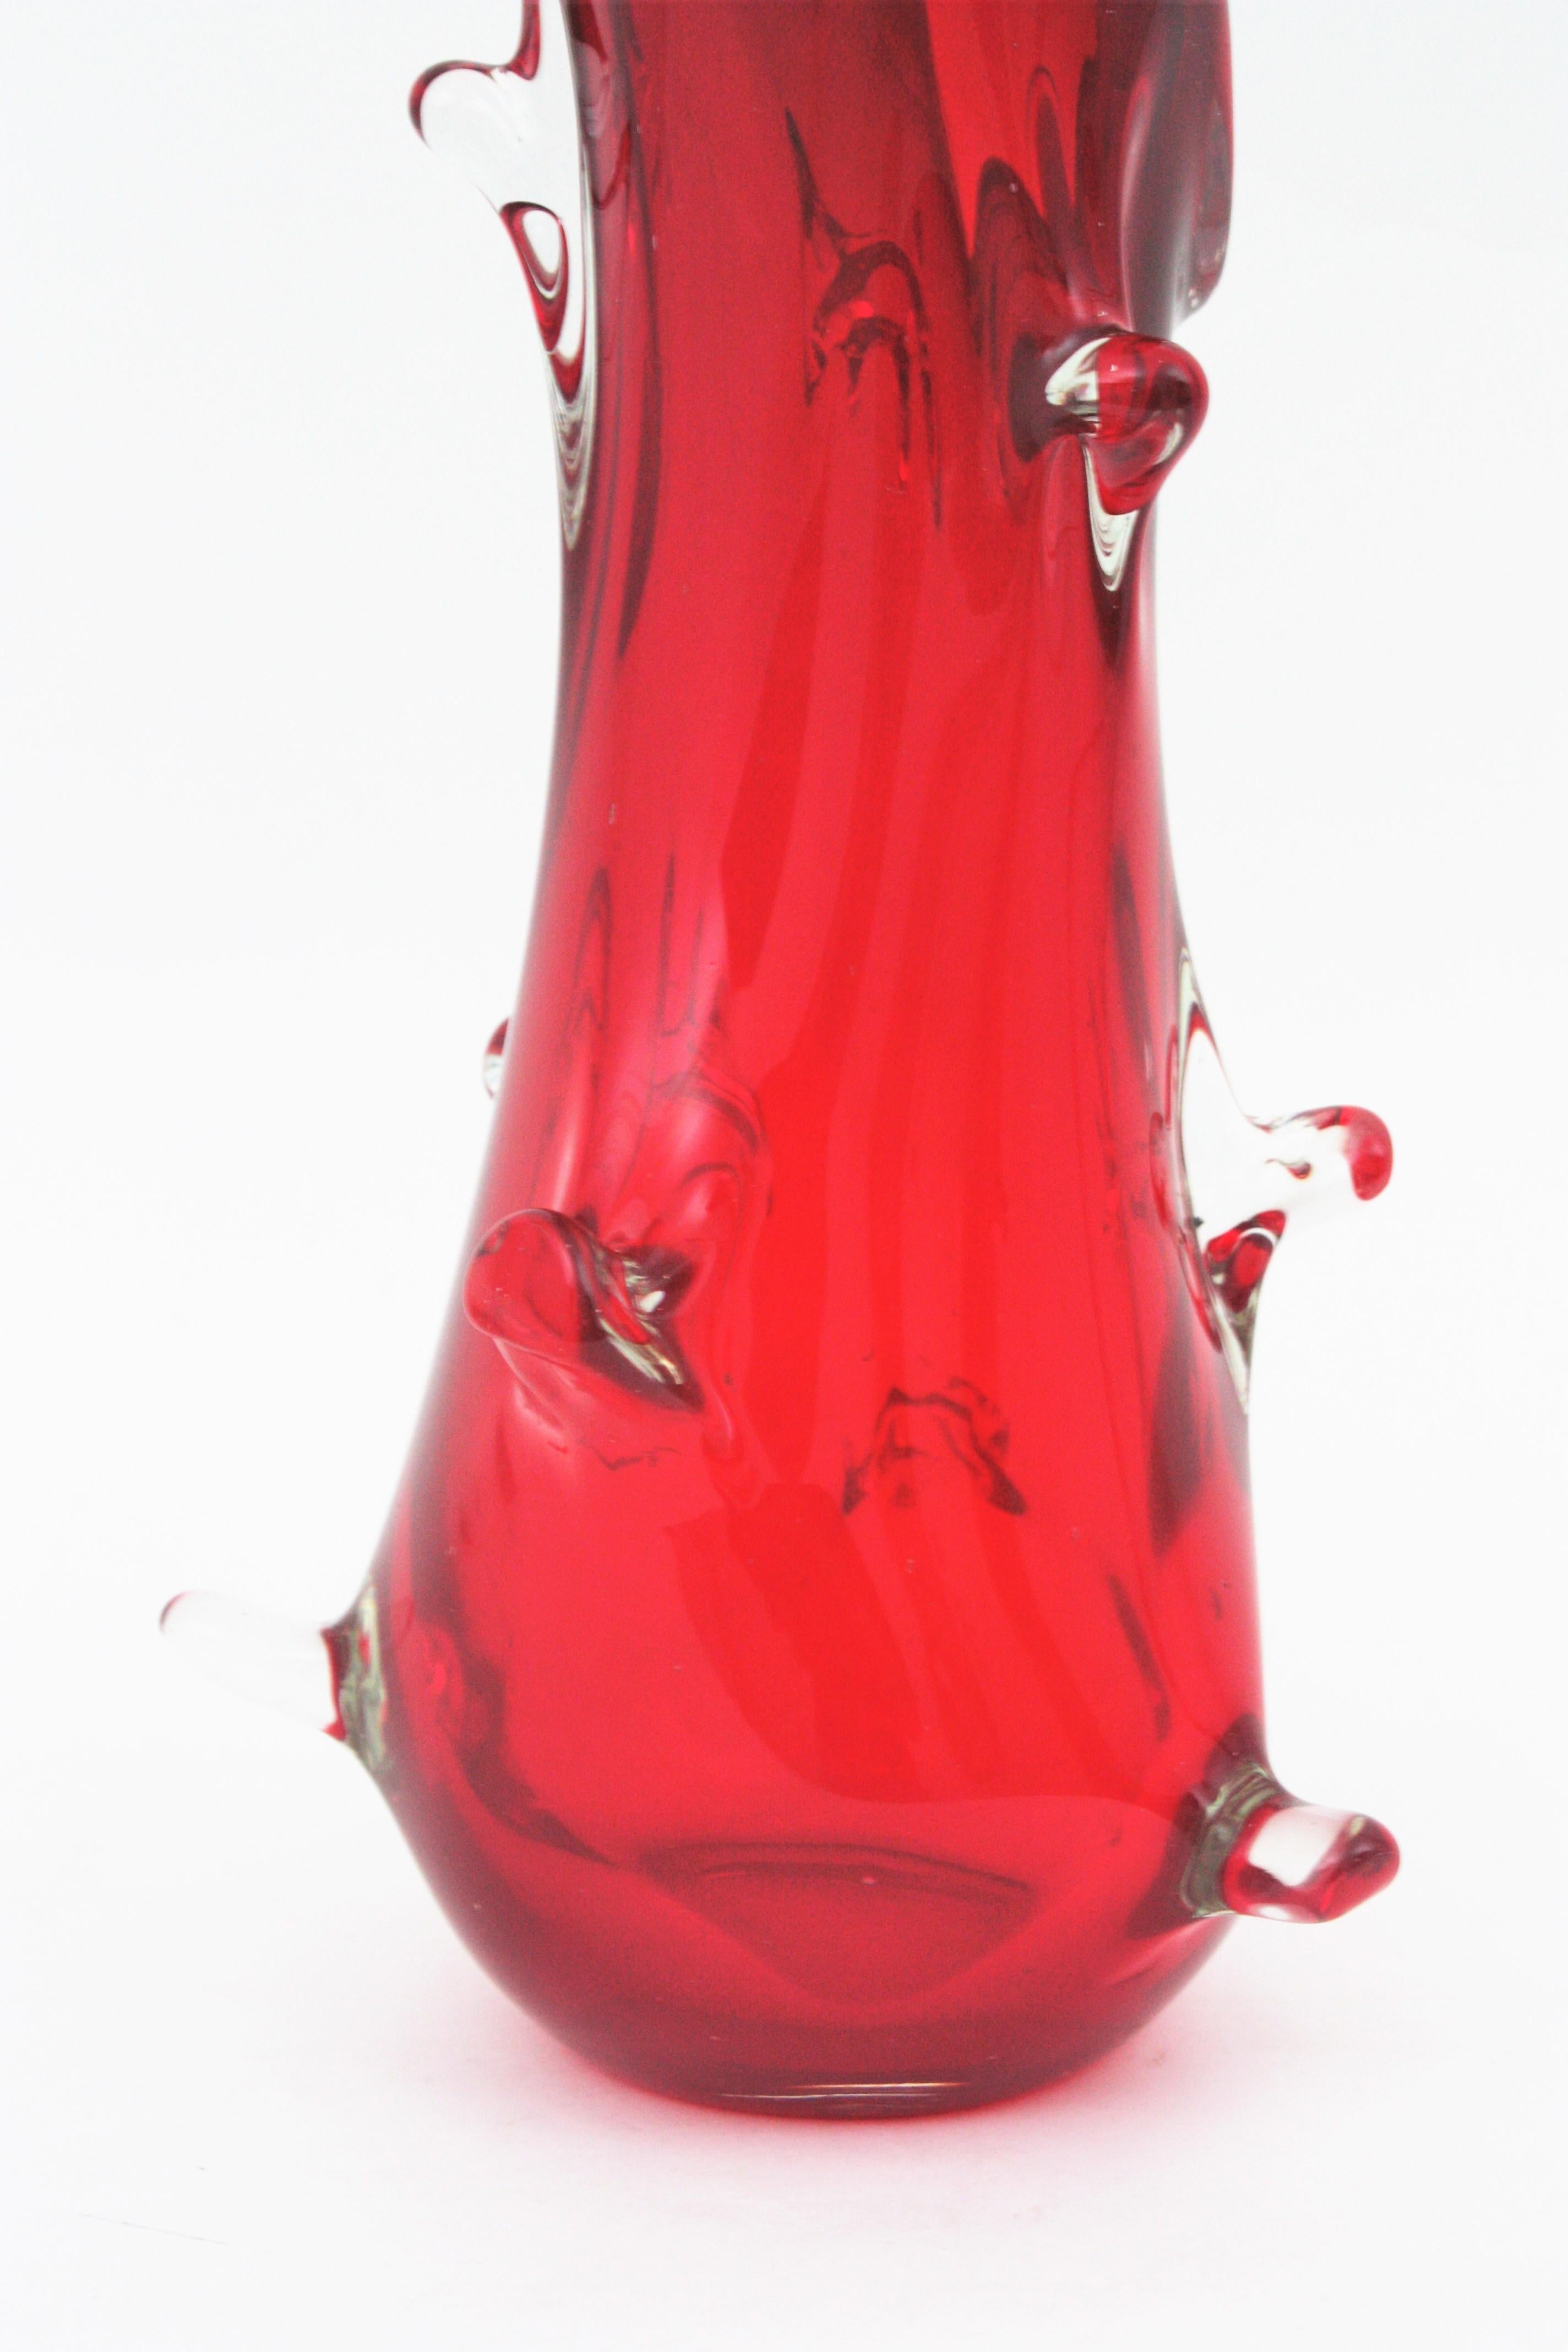 Archimede Seguso Murano Sommerso Red Iridiscent Art Glass Vase, 1960s For Sale 6